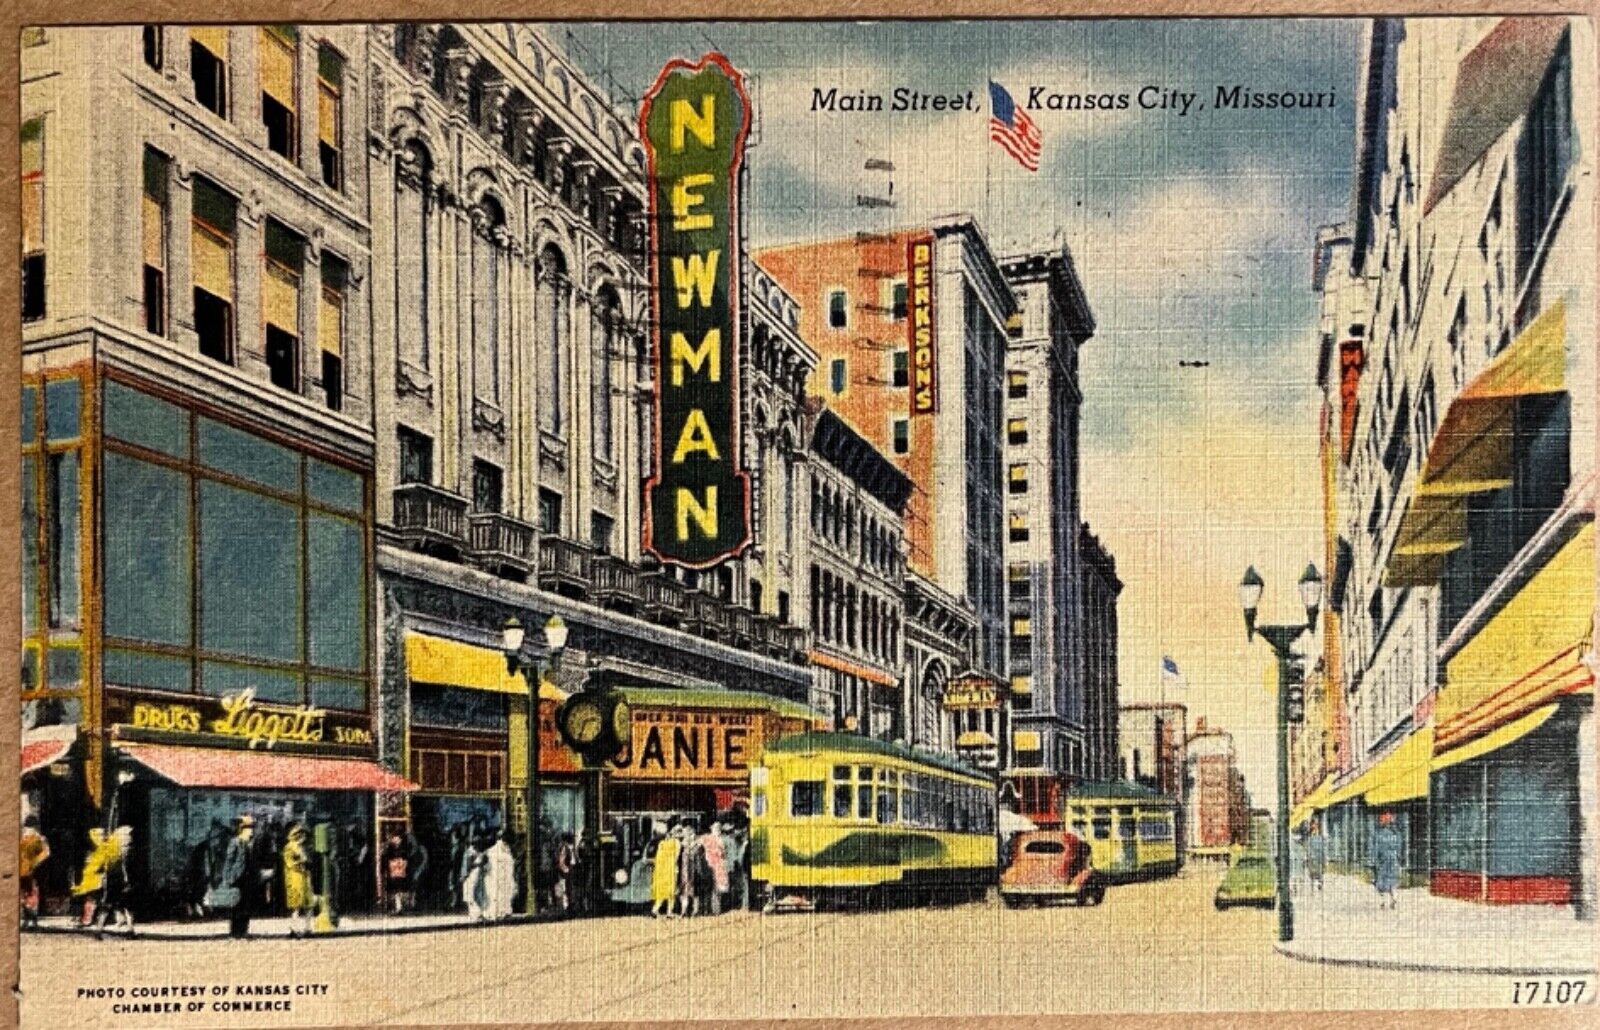 Kansas City Missouri Main Street Newman Theater Drug Store Postcard c1940